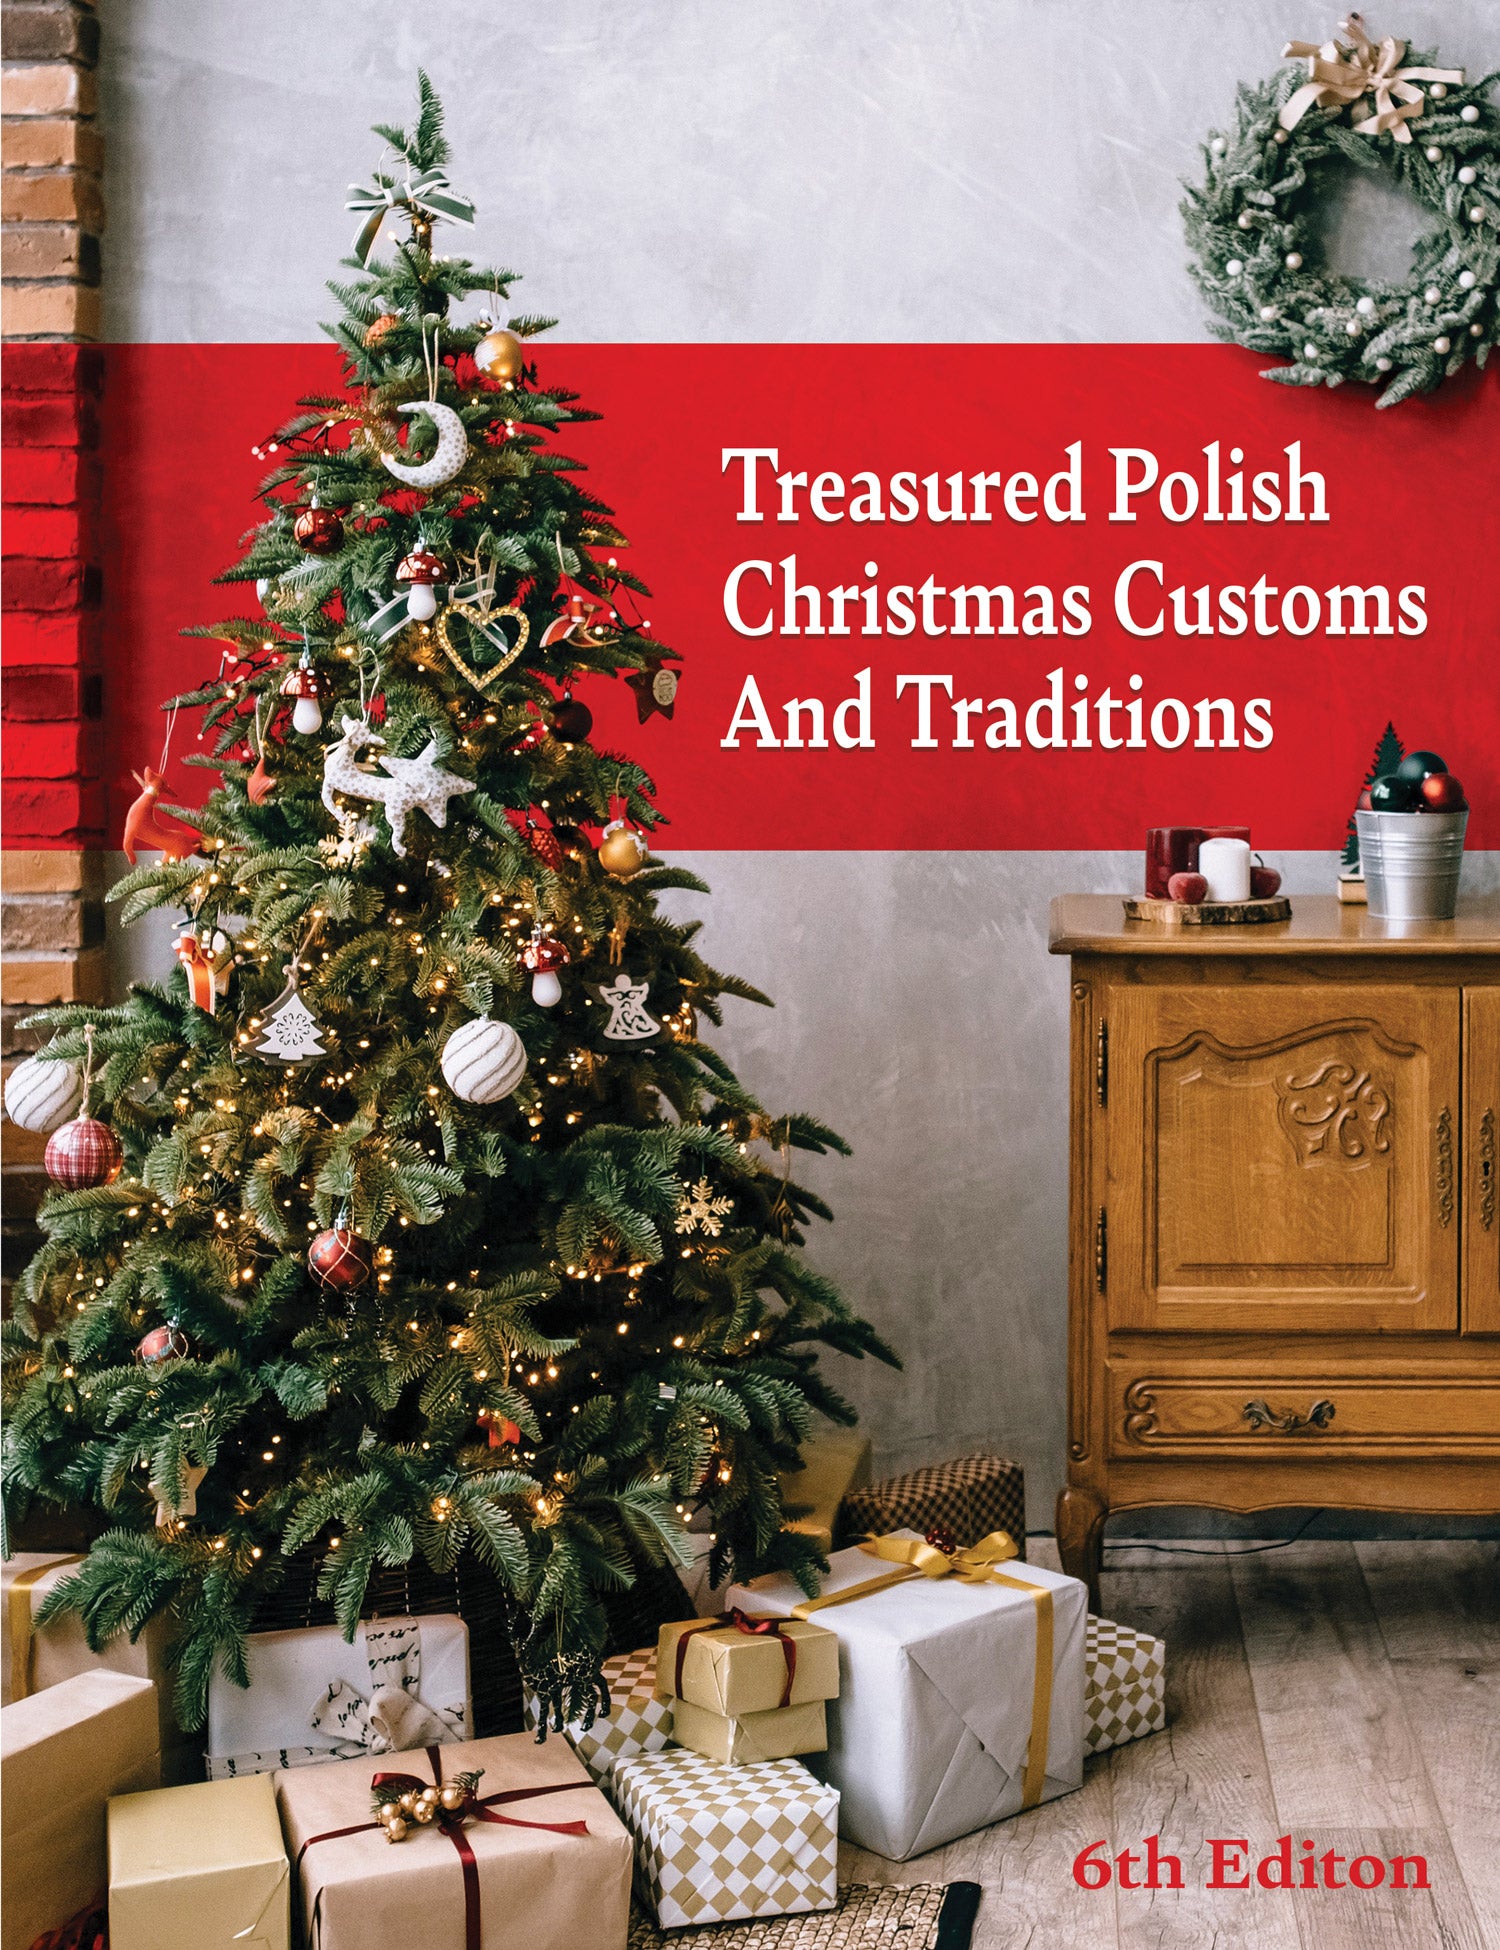 Treasured Polish Christmas Customs & Traditions - 6th Edition